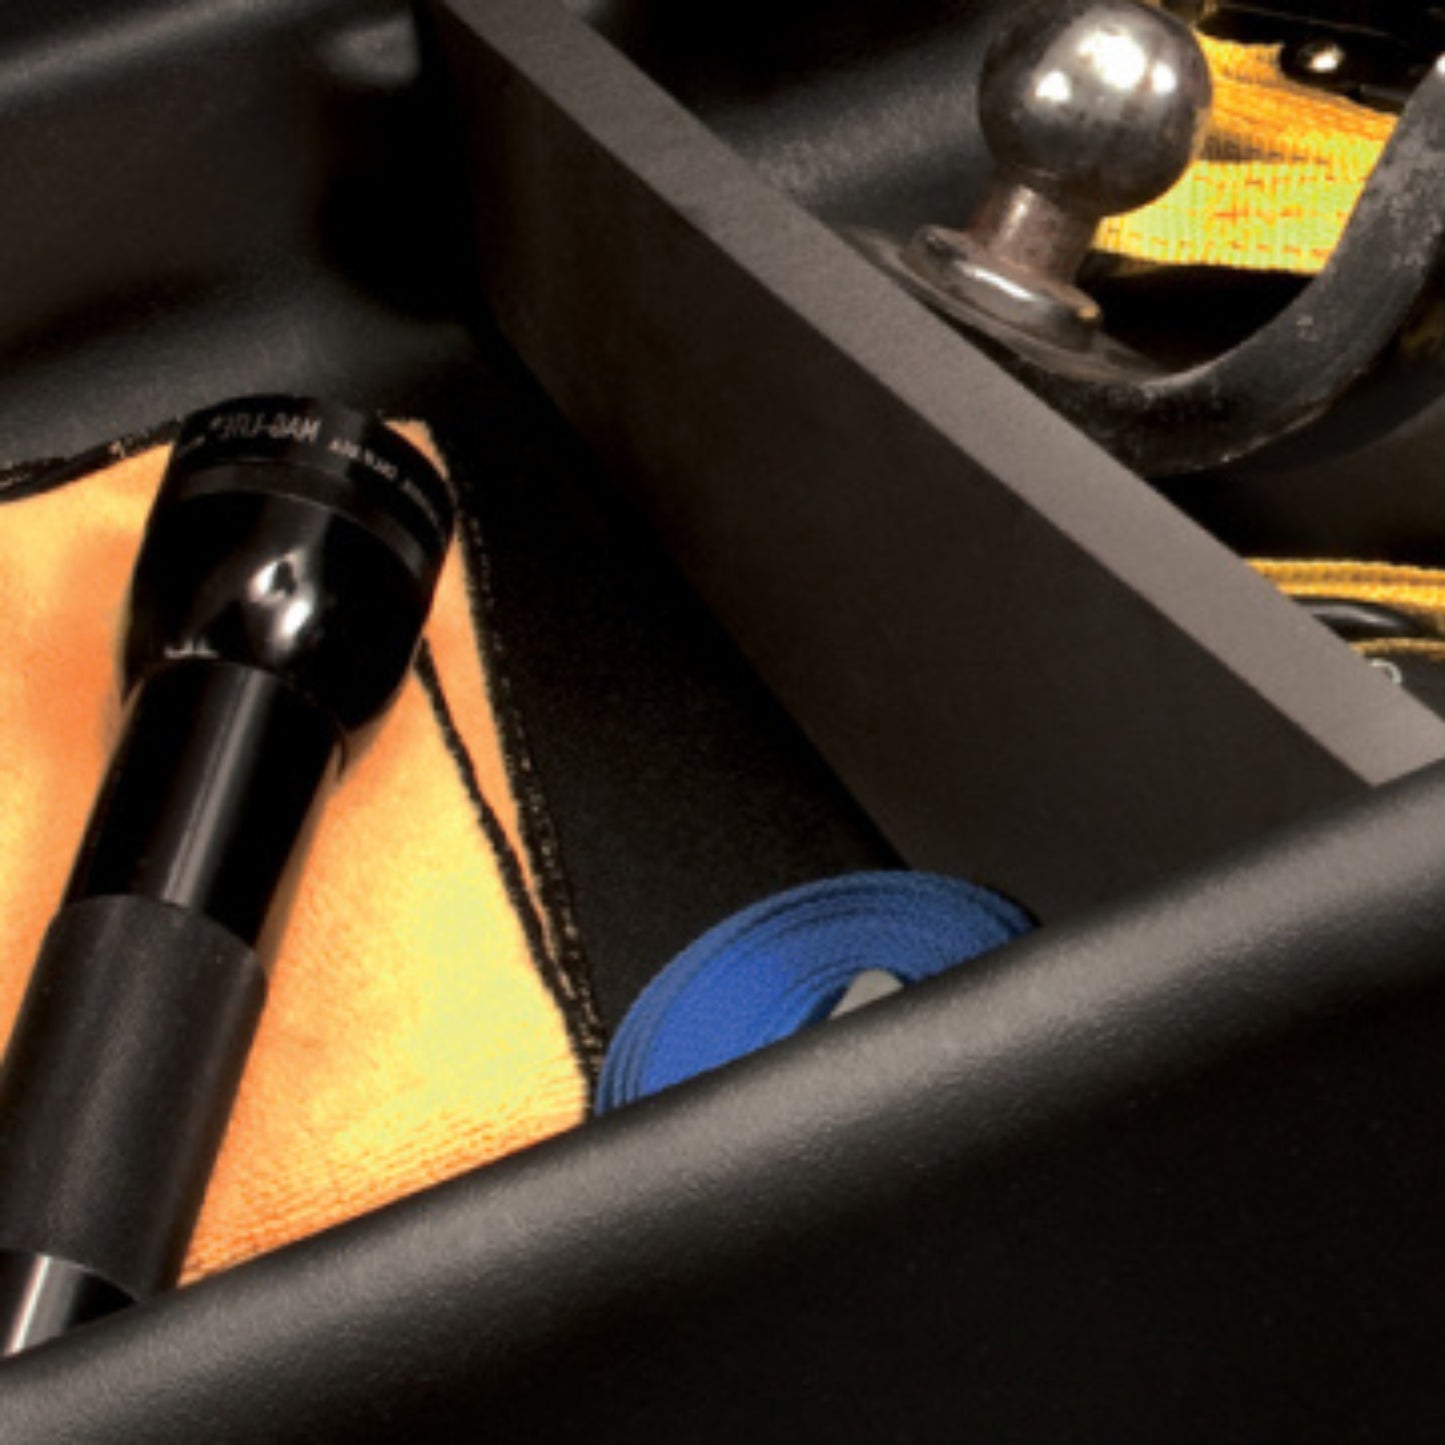 Caja almacenamiento GearBox Chevrolet/GMC 5'8'' Doble Cabina Mod. 2014-2017 Husky Liners